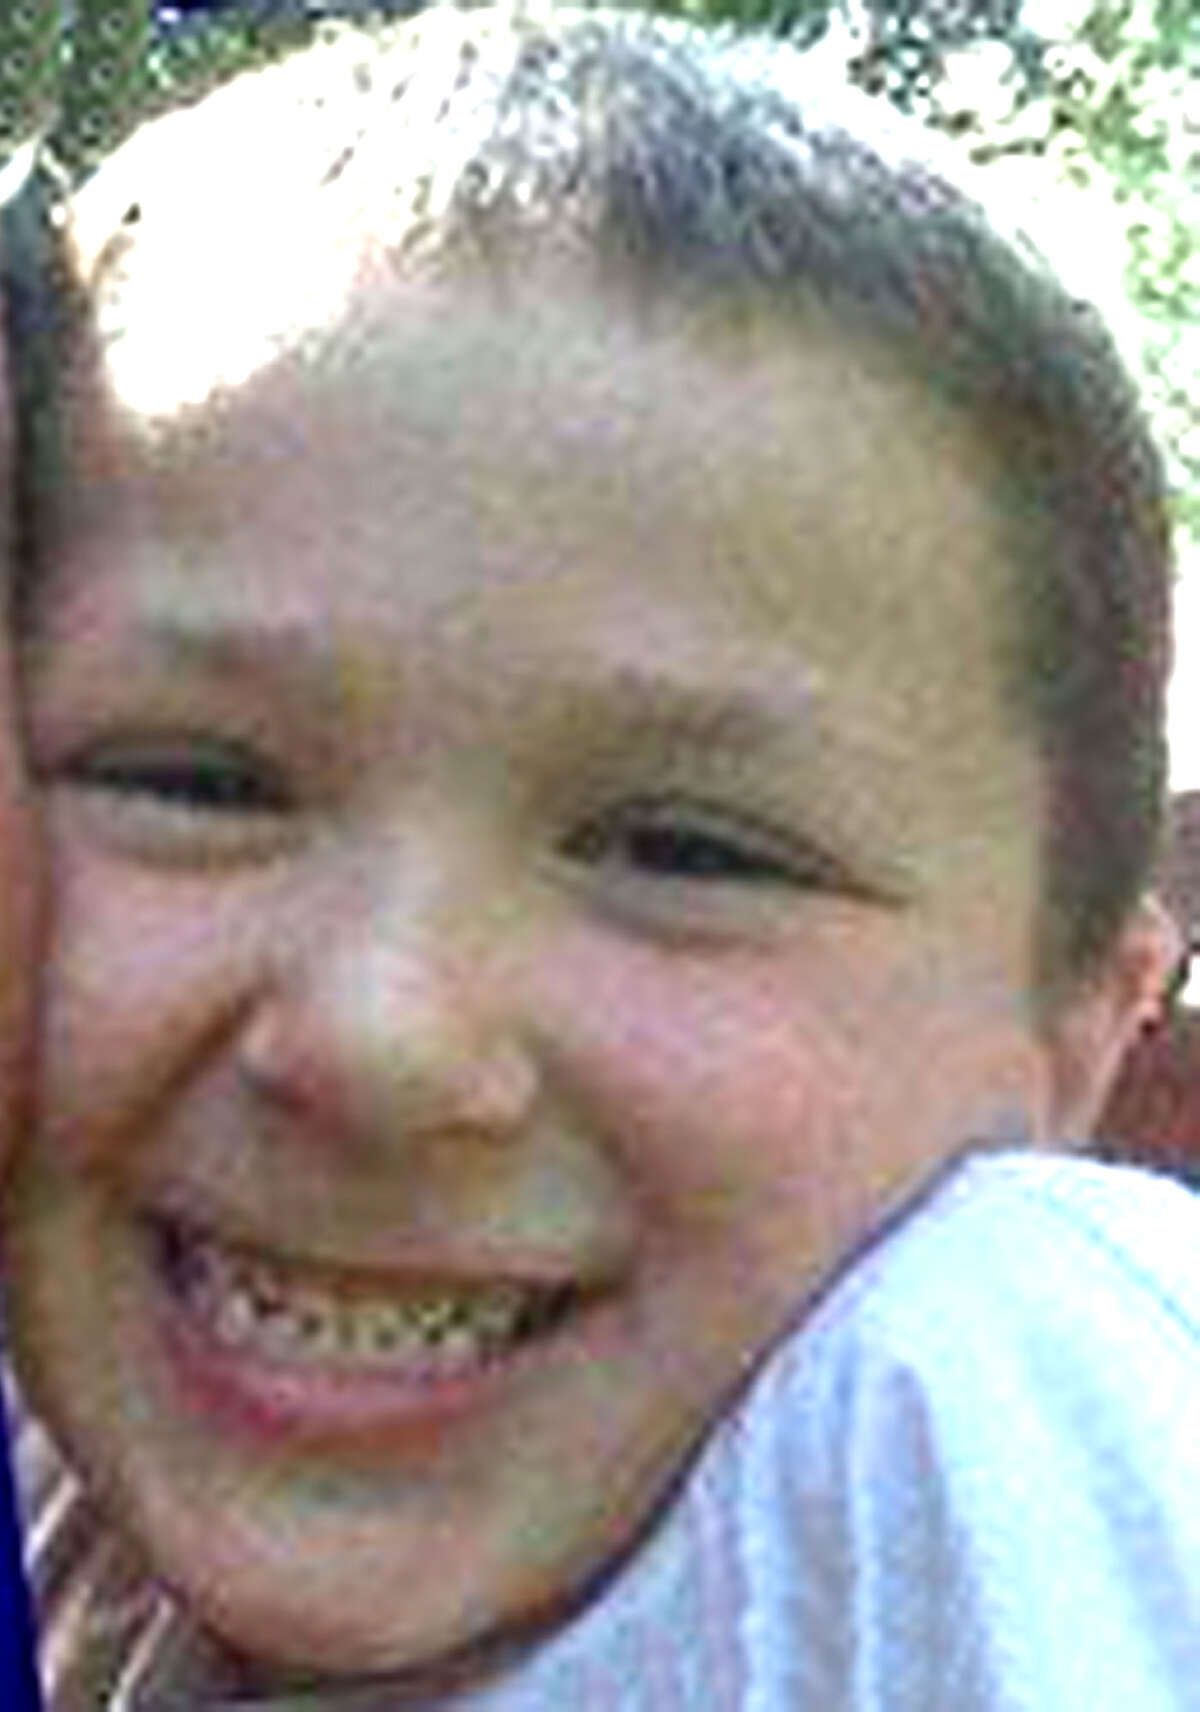 Jesse McCord Lewis, 6, of the Sandy Hook district of Newtown, died Dec. 14, 2012